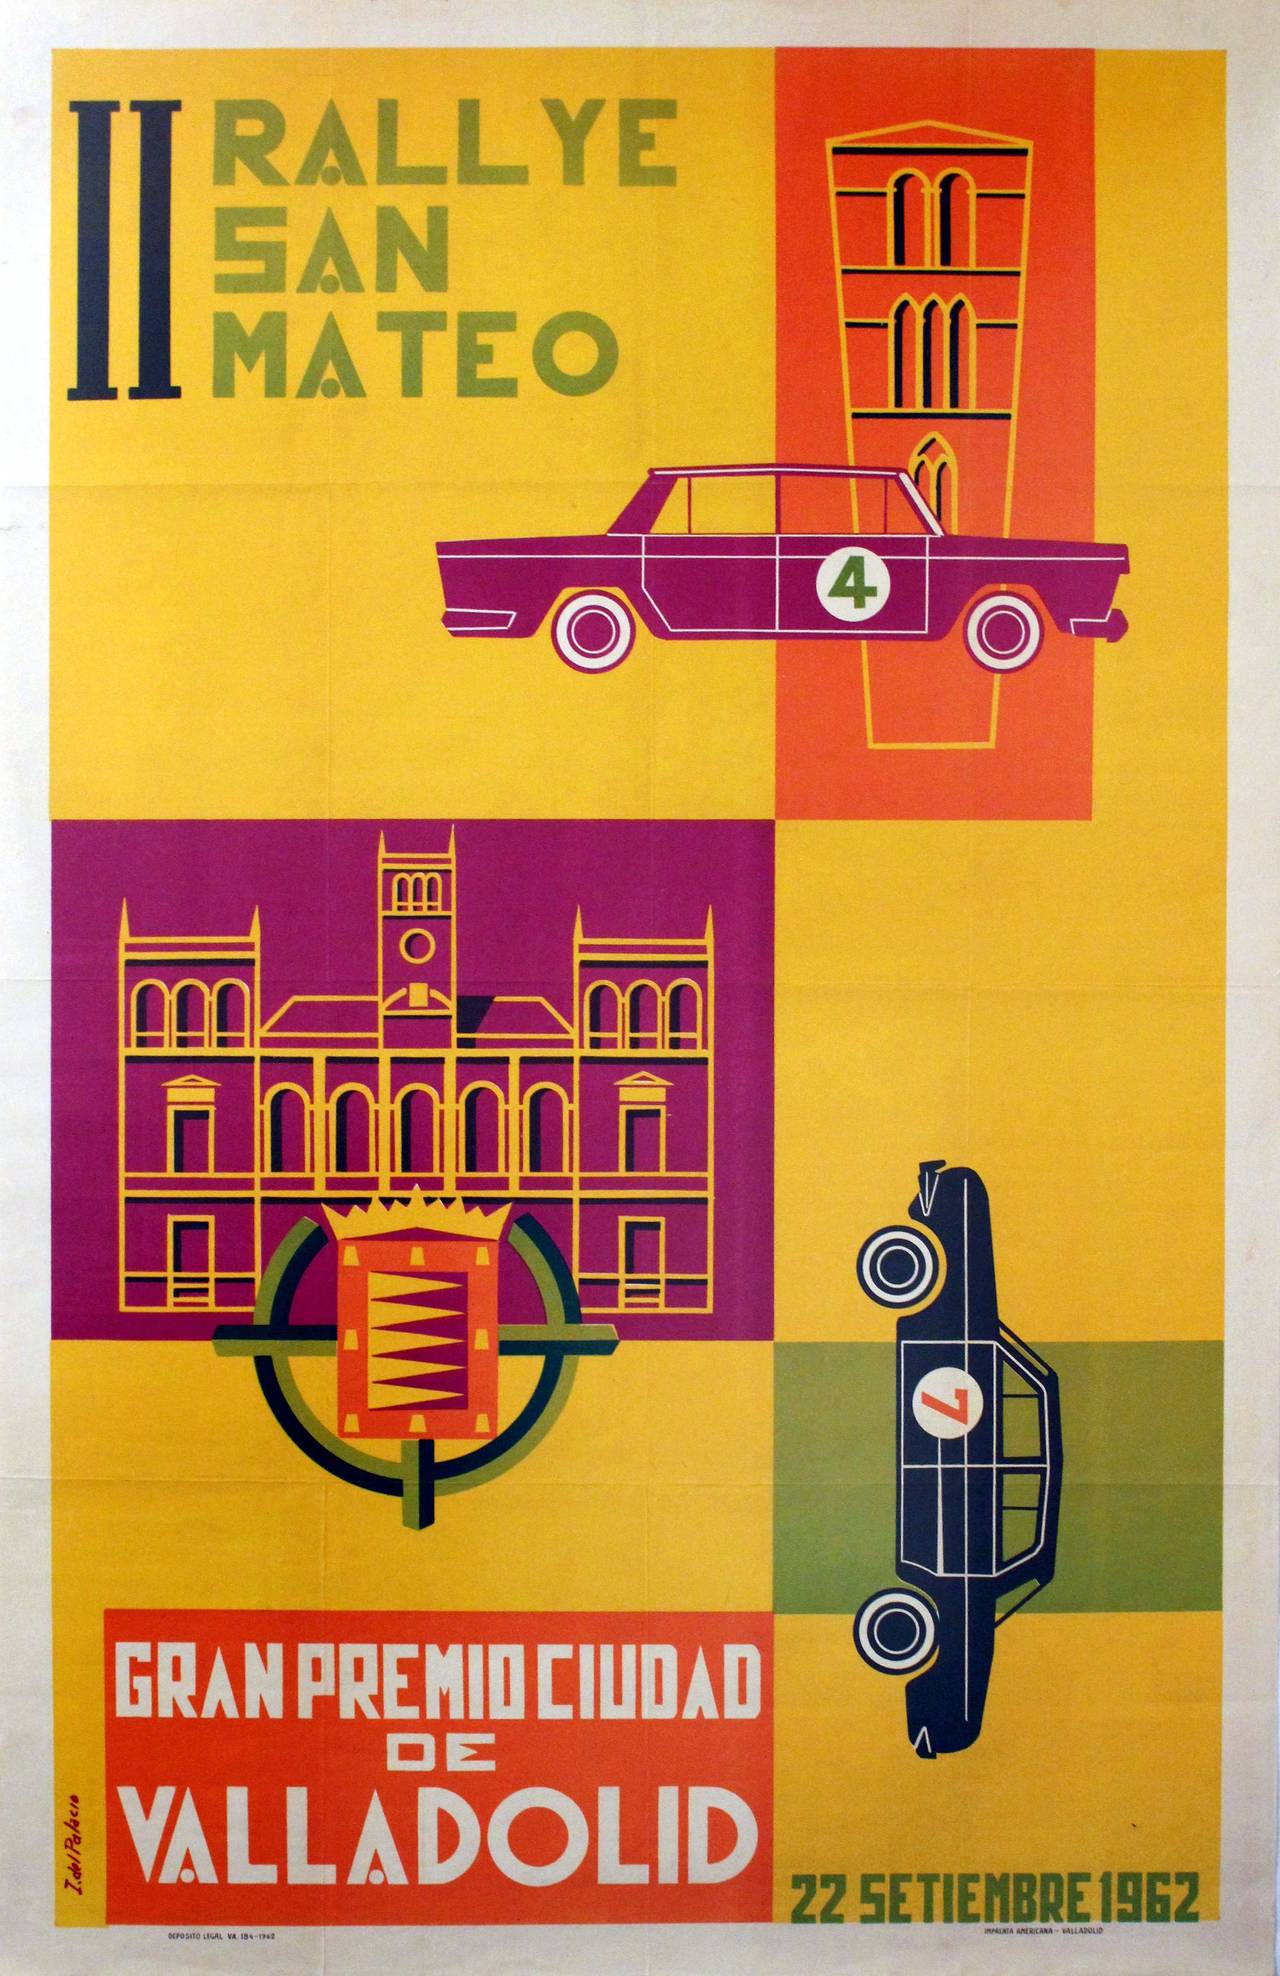 I del Palacio Print - Original Mid-Century Modern Poster For The Rallye De San Mateo Grand Prix 1962